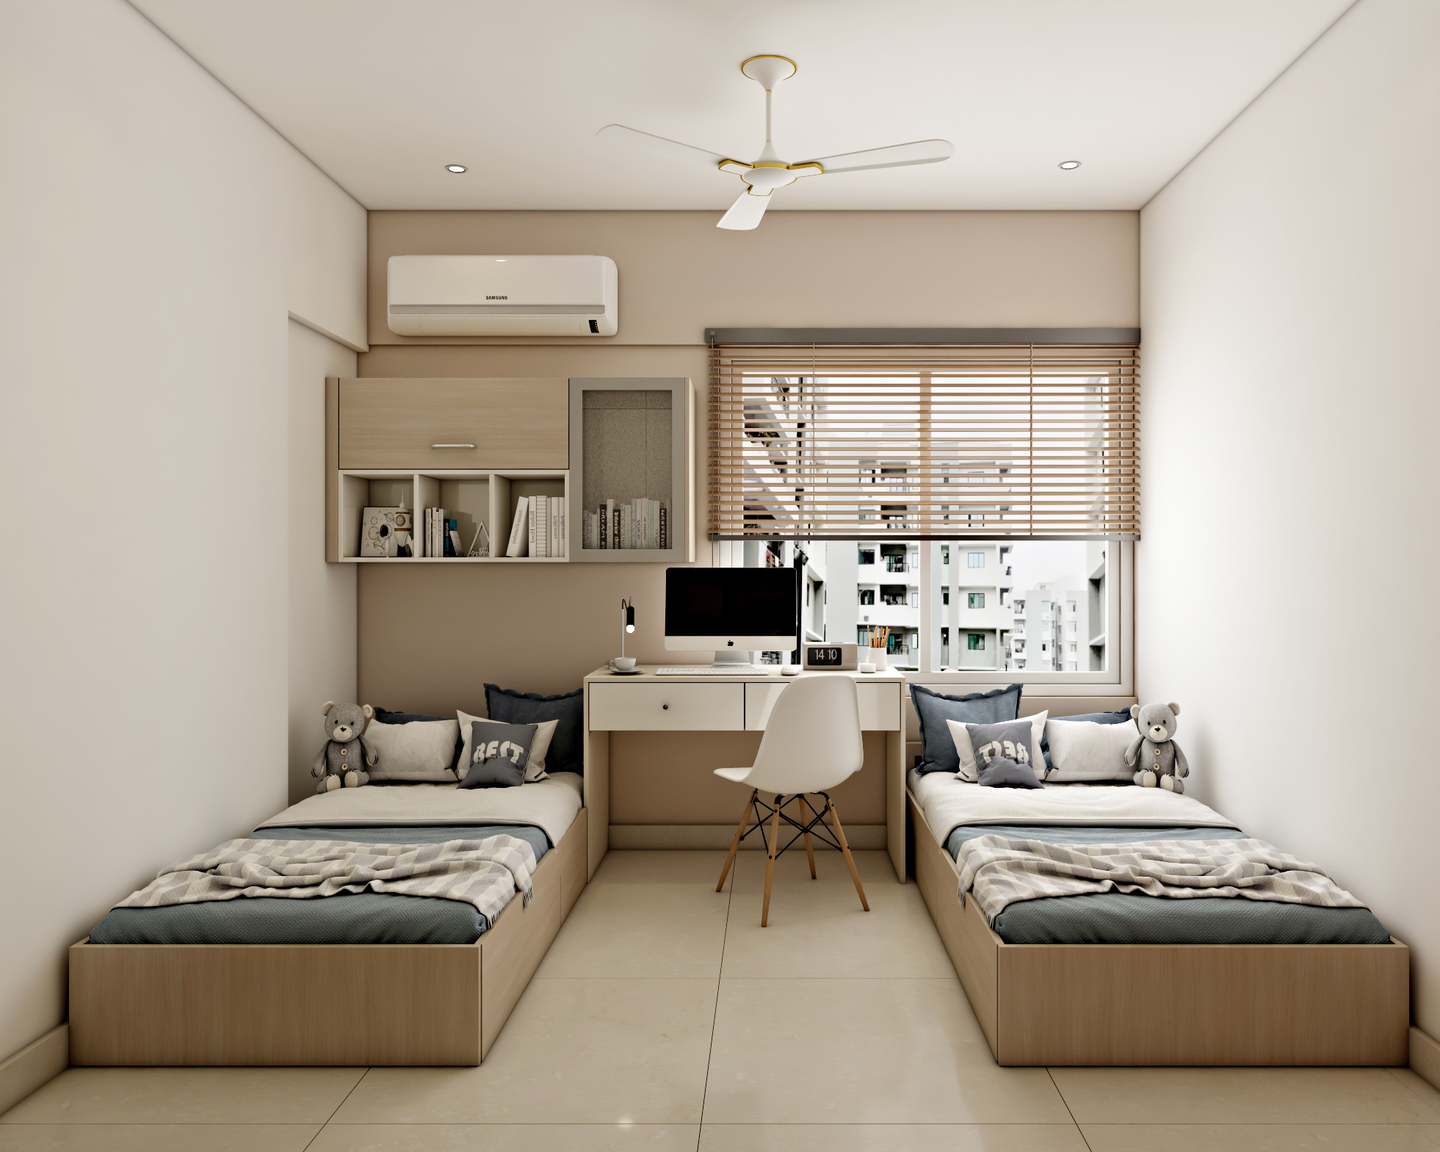 Kids Bedroom Design With Dual Beds - Livspace